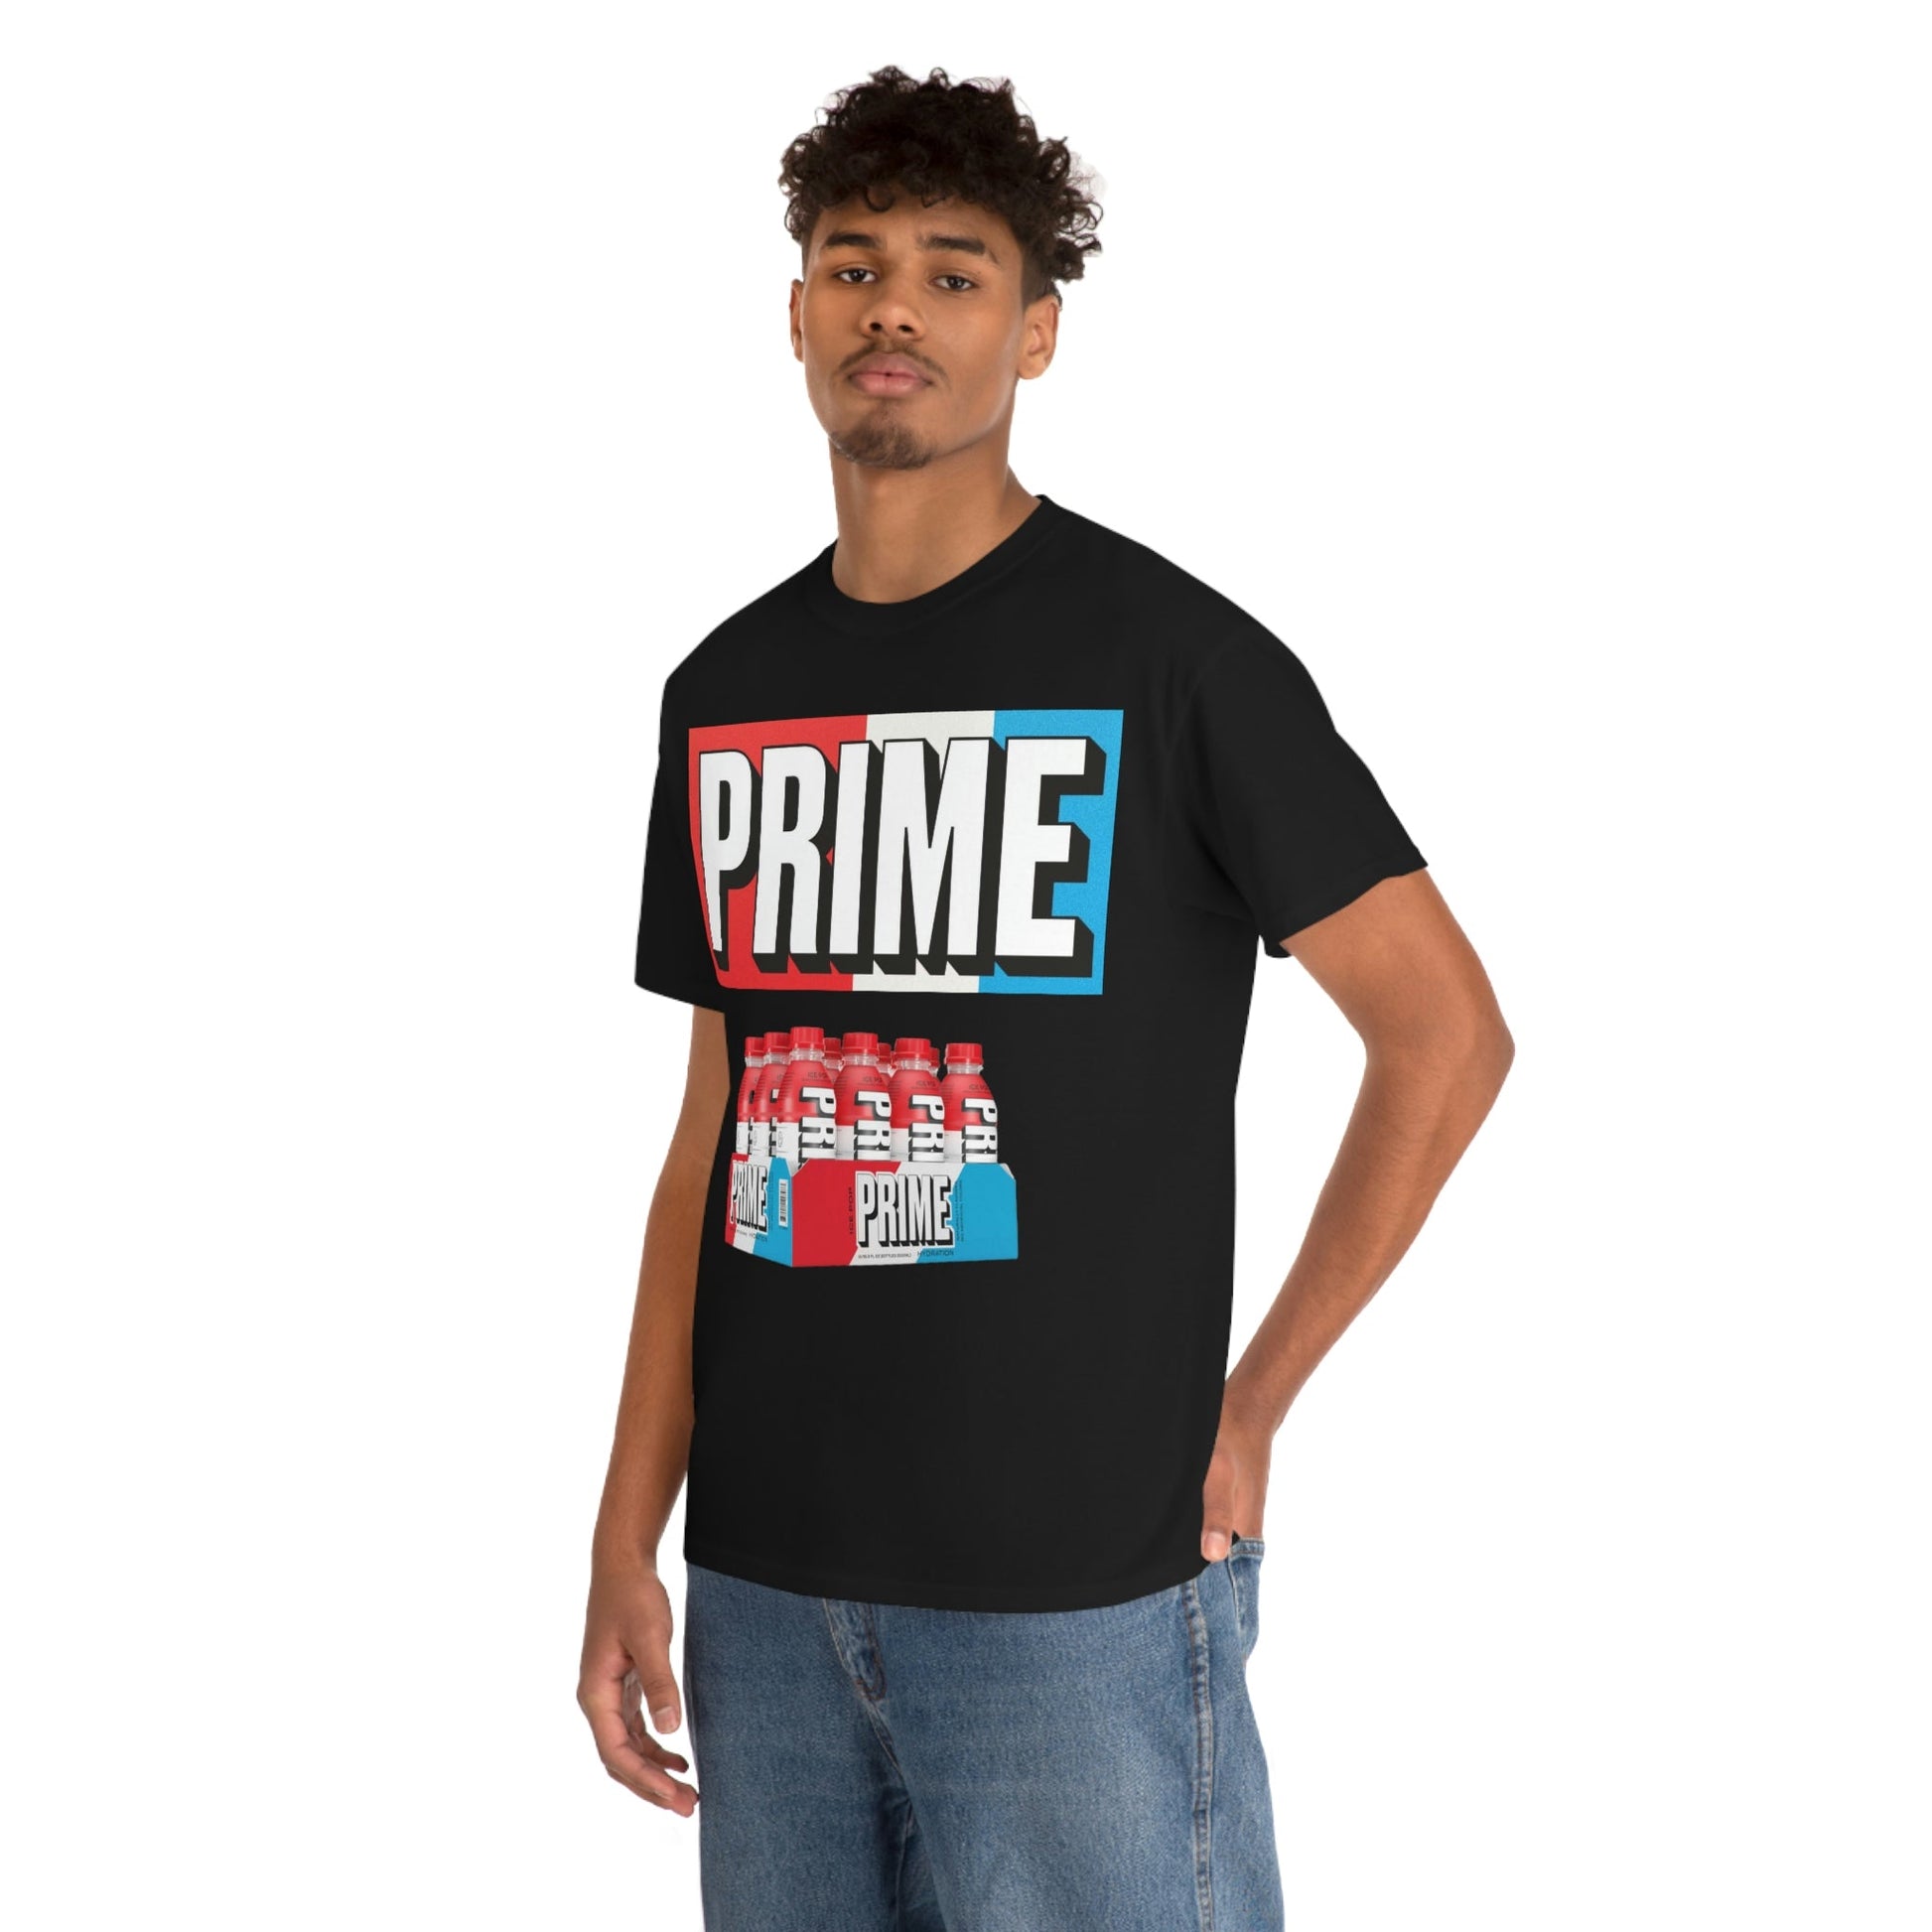 Prime Energy Drink T-Shirt - RetroTeeShop